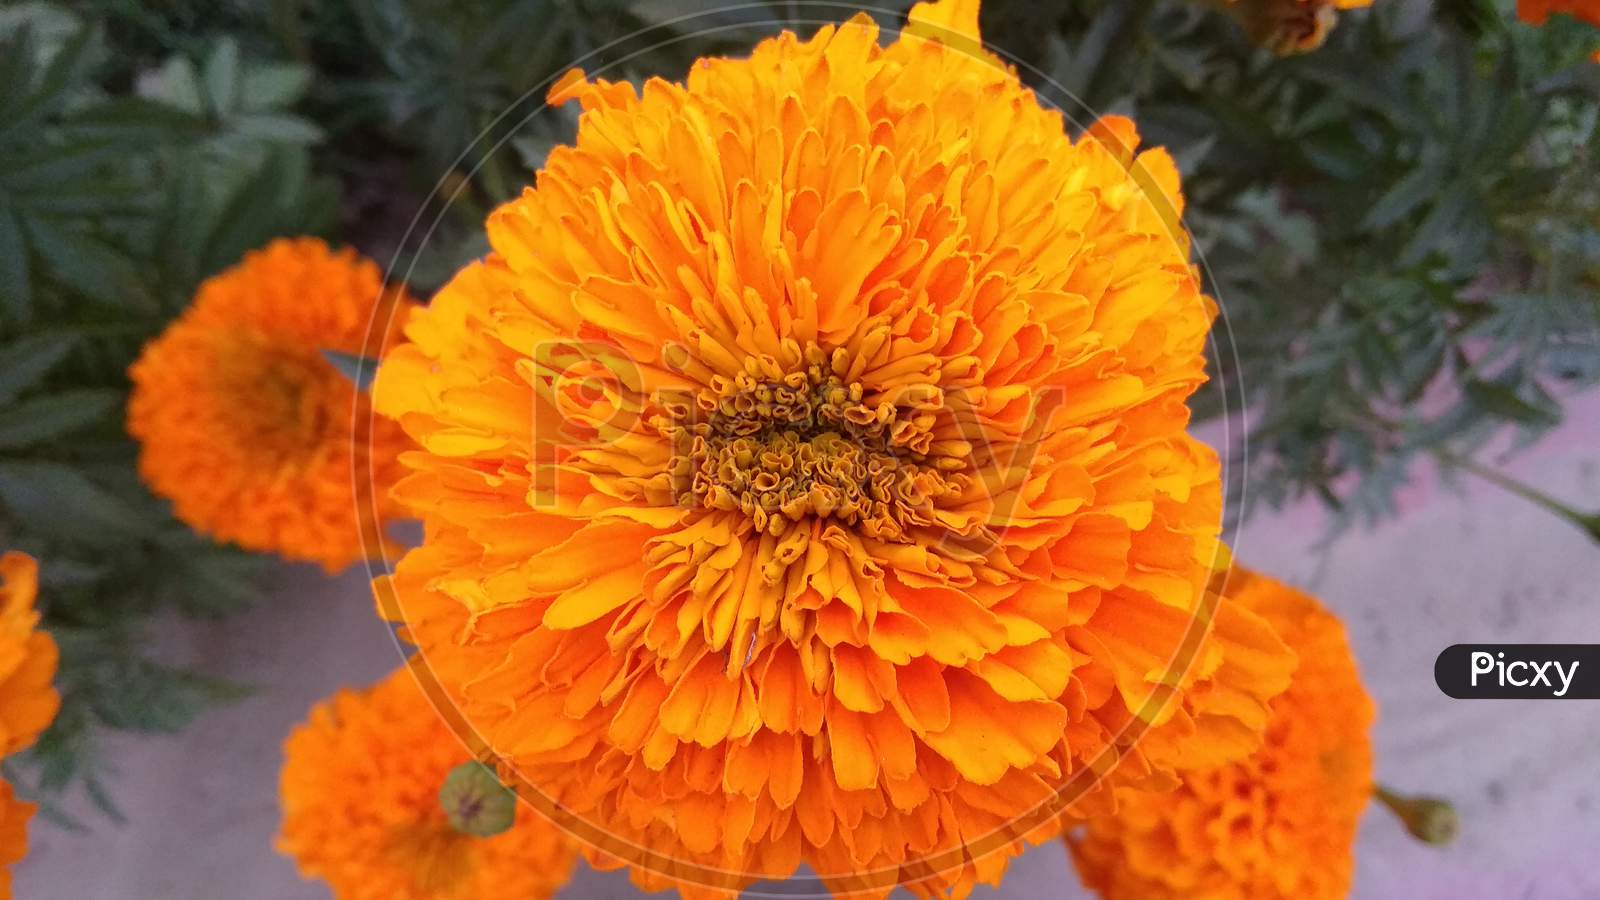 Orenge english marigold flower plant in selective focus